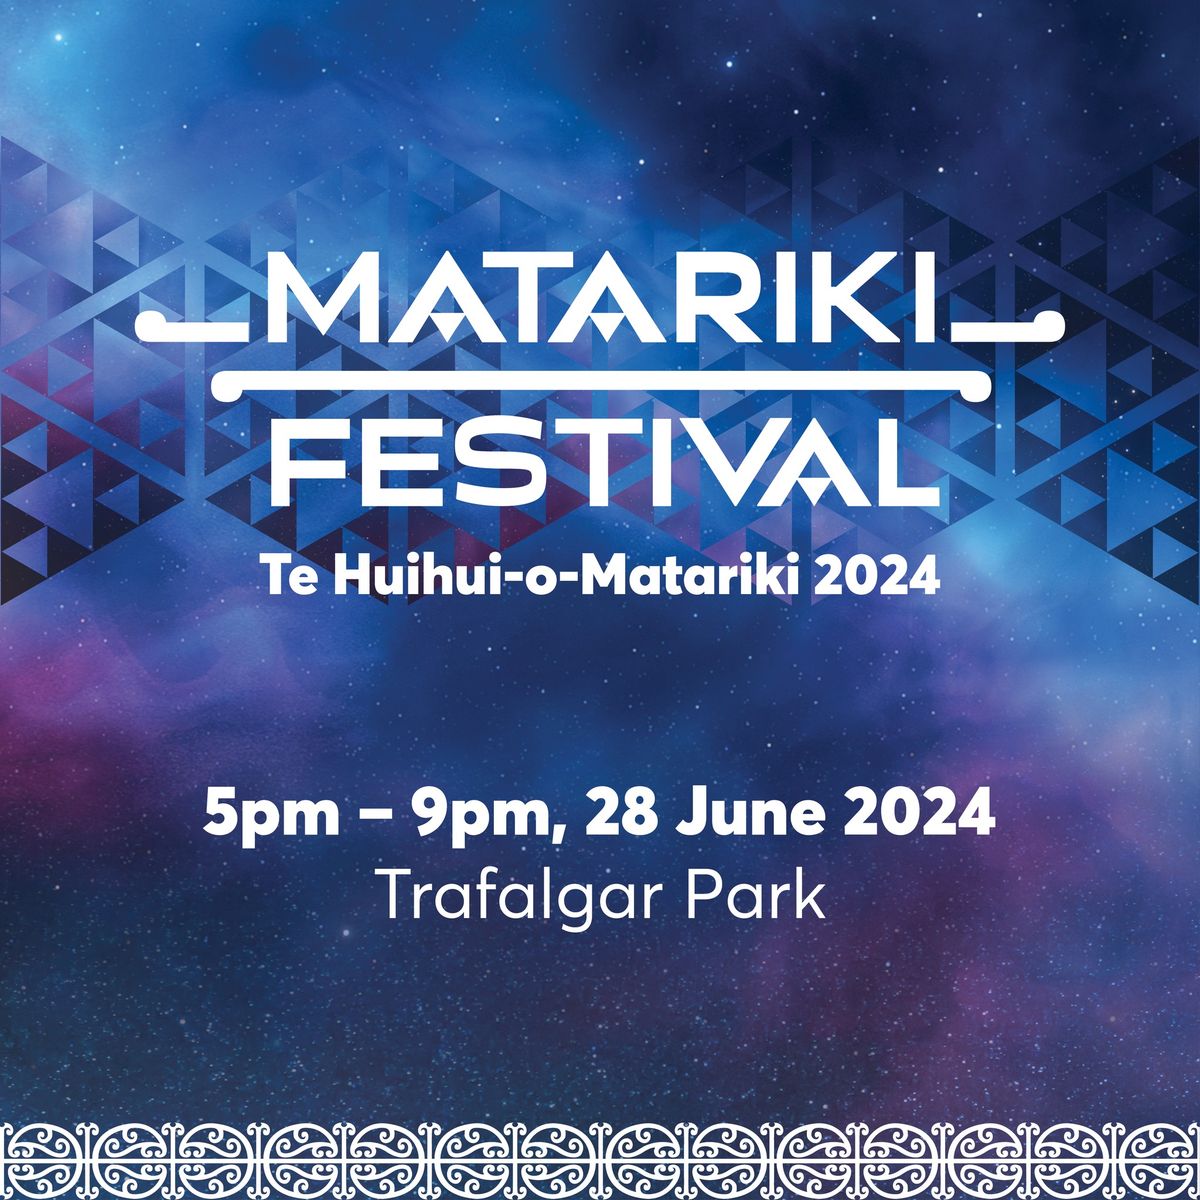 Matariki Festival, Te Huihui-o-Matariki 2024